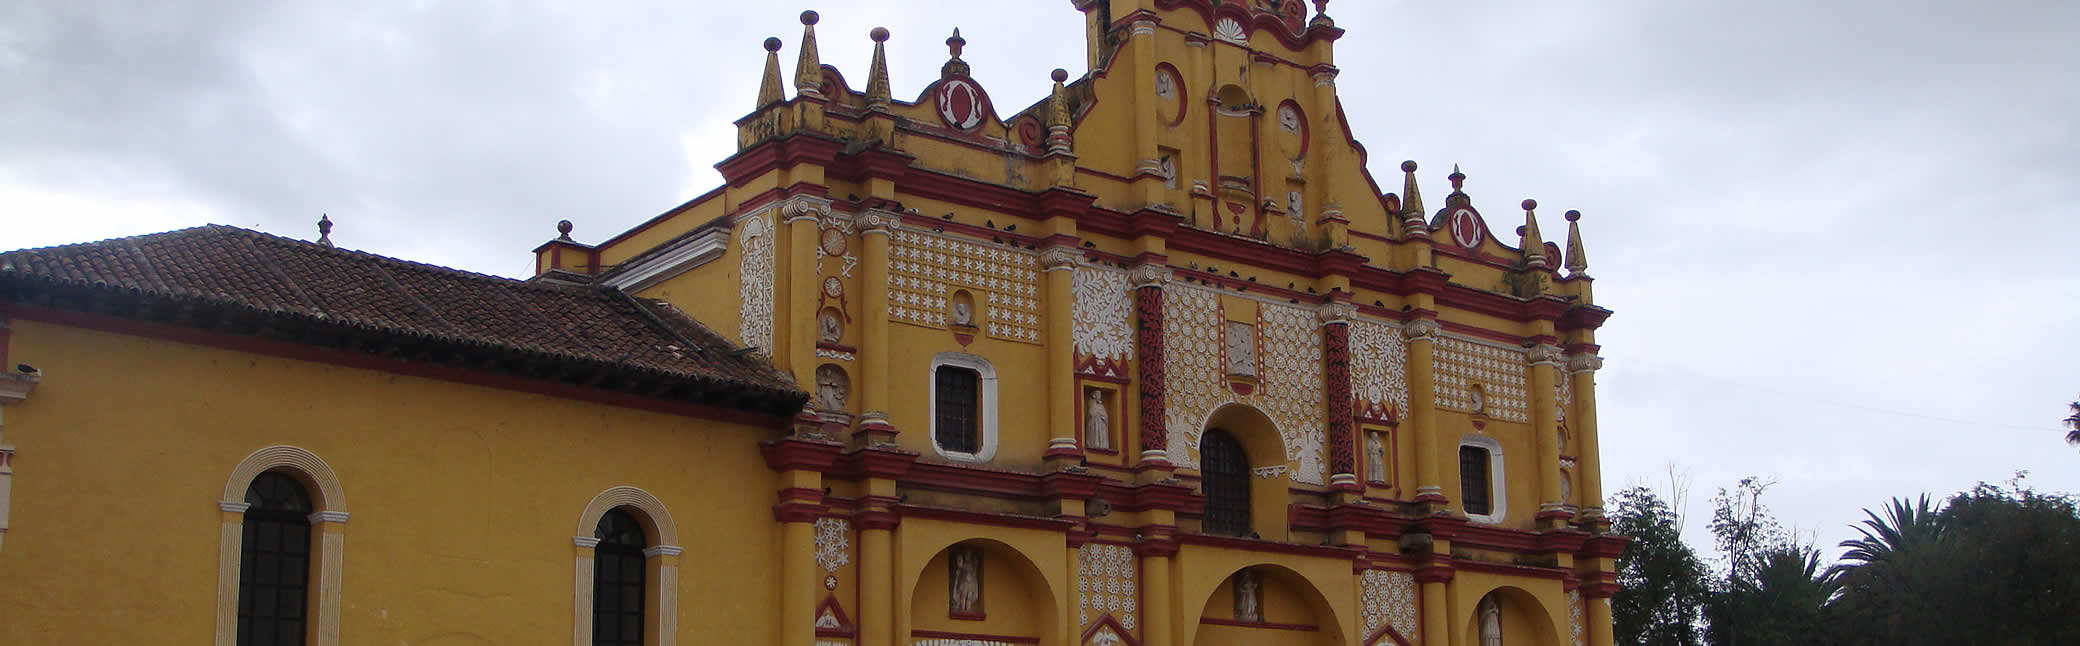 Hoteles de Chiapas